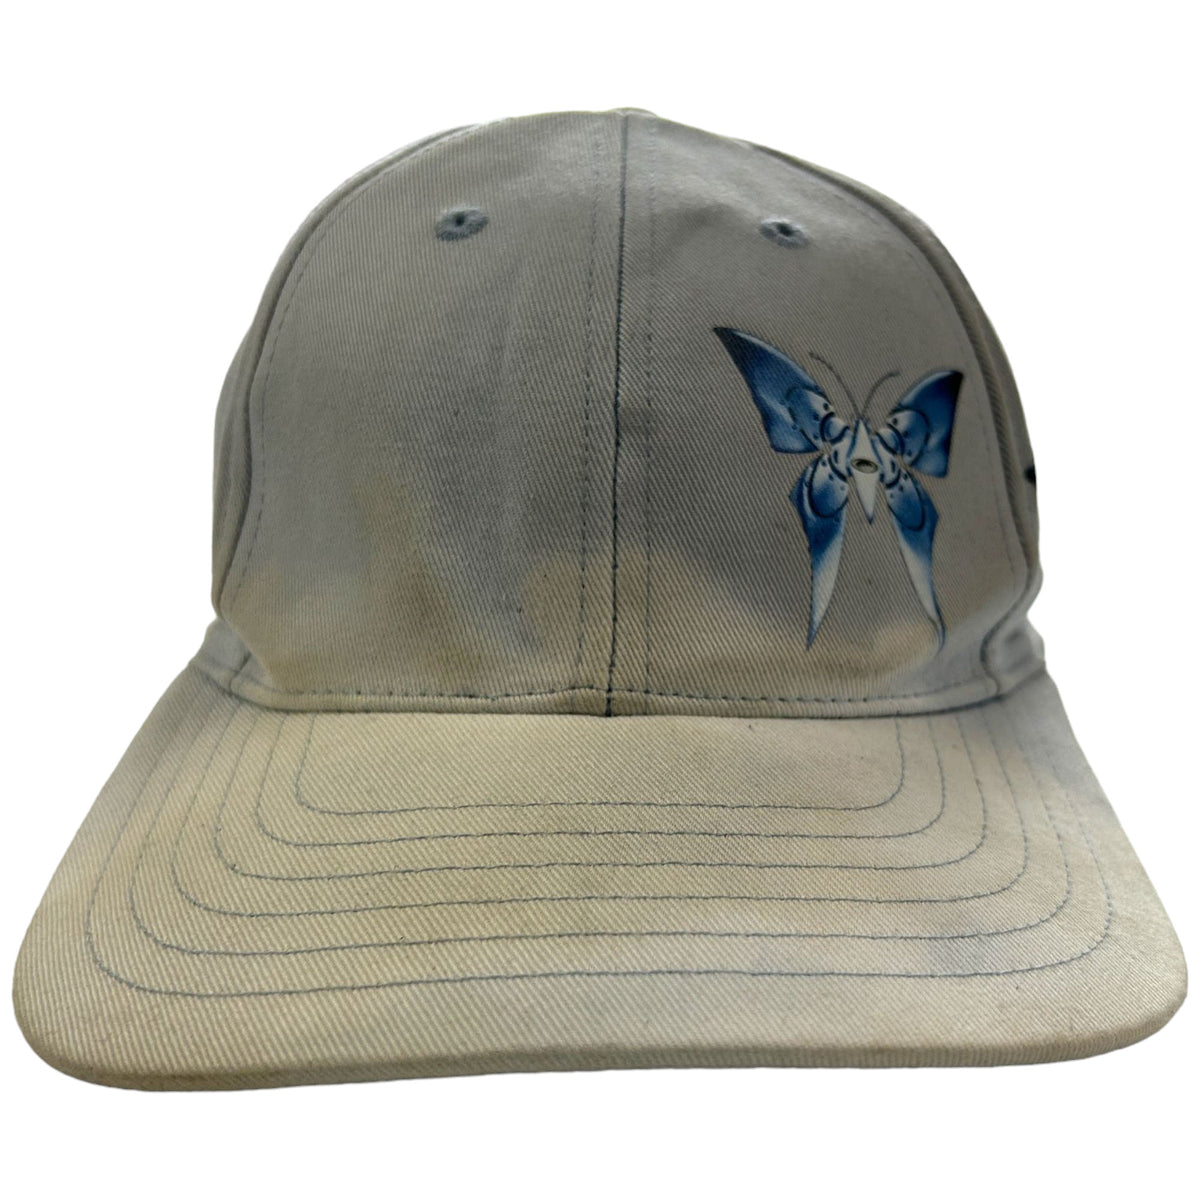 Vintage Oakley Butterfly Graphic Cap